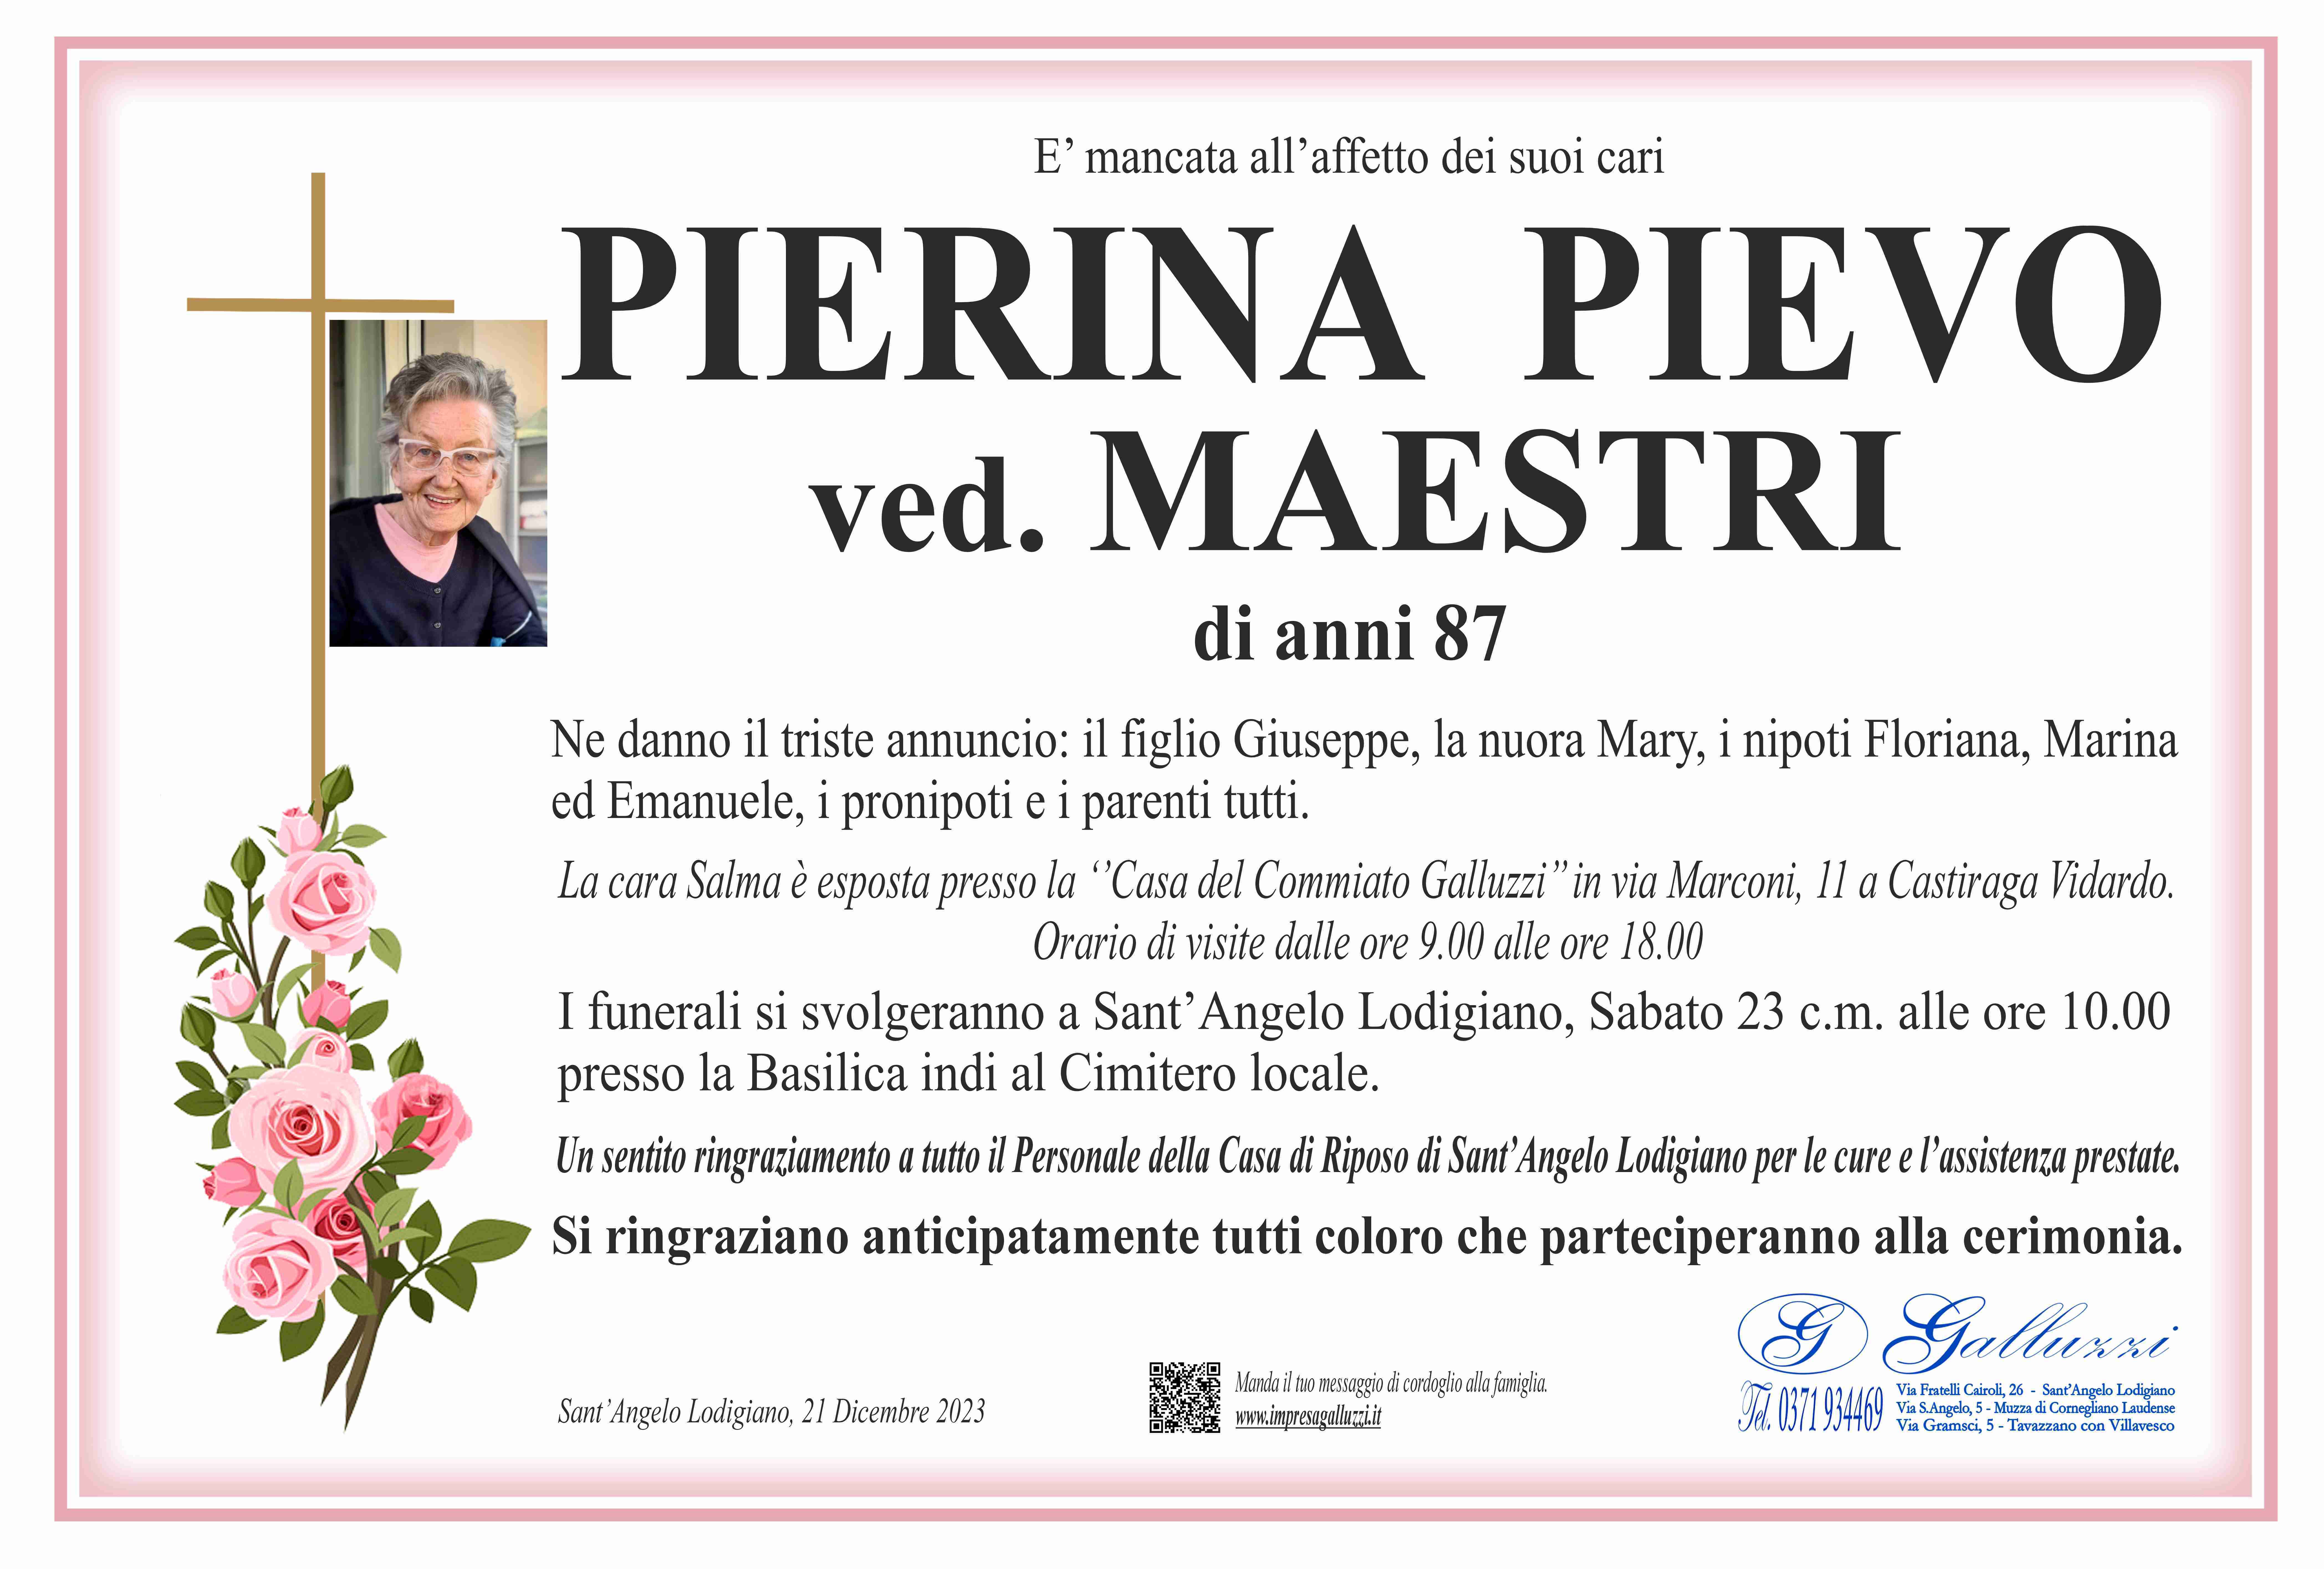 Pierina Pievo